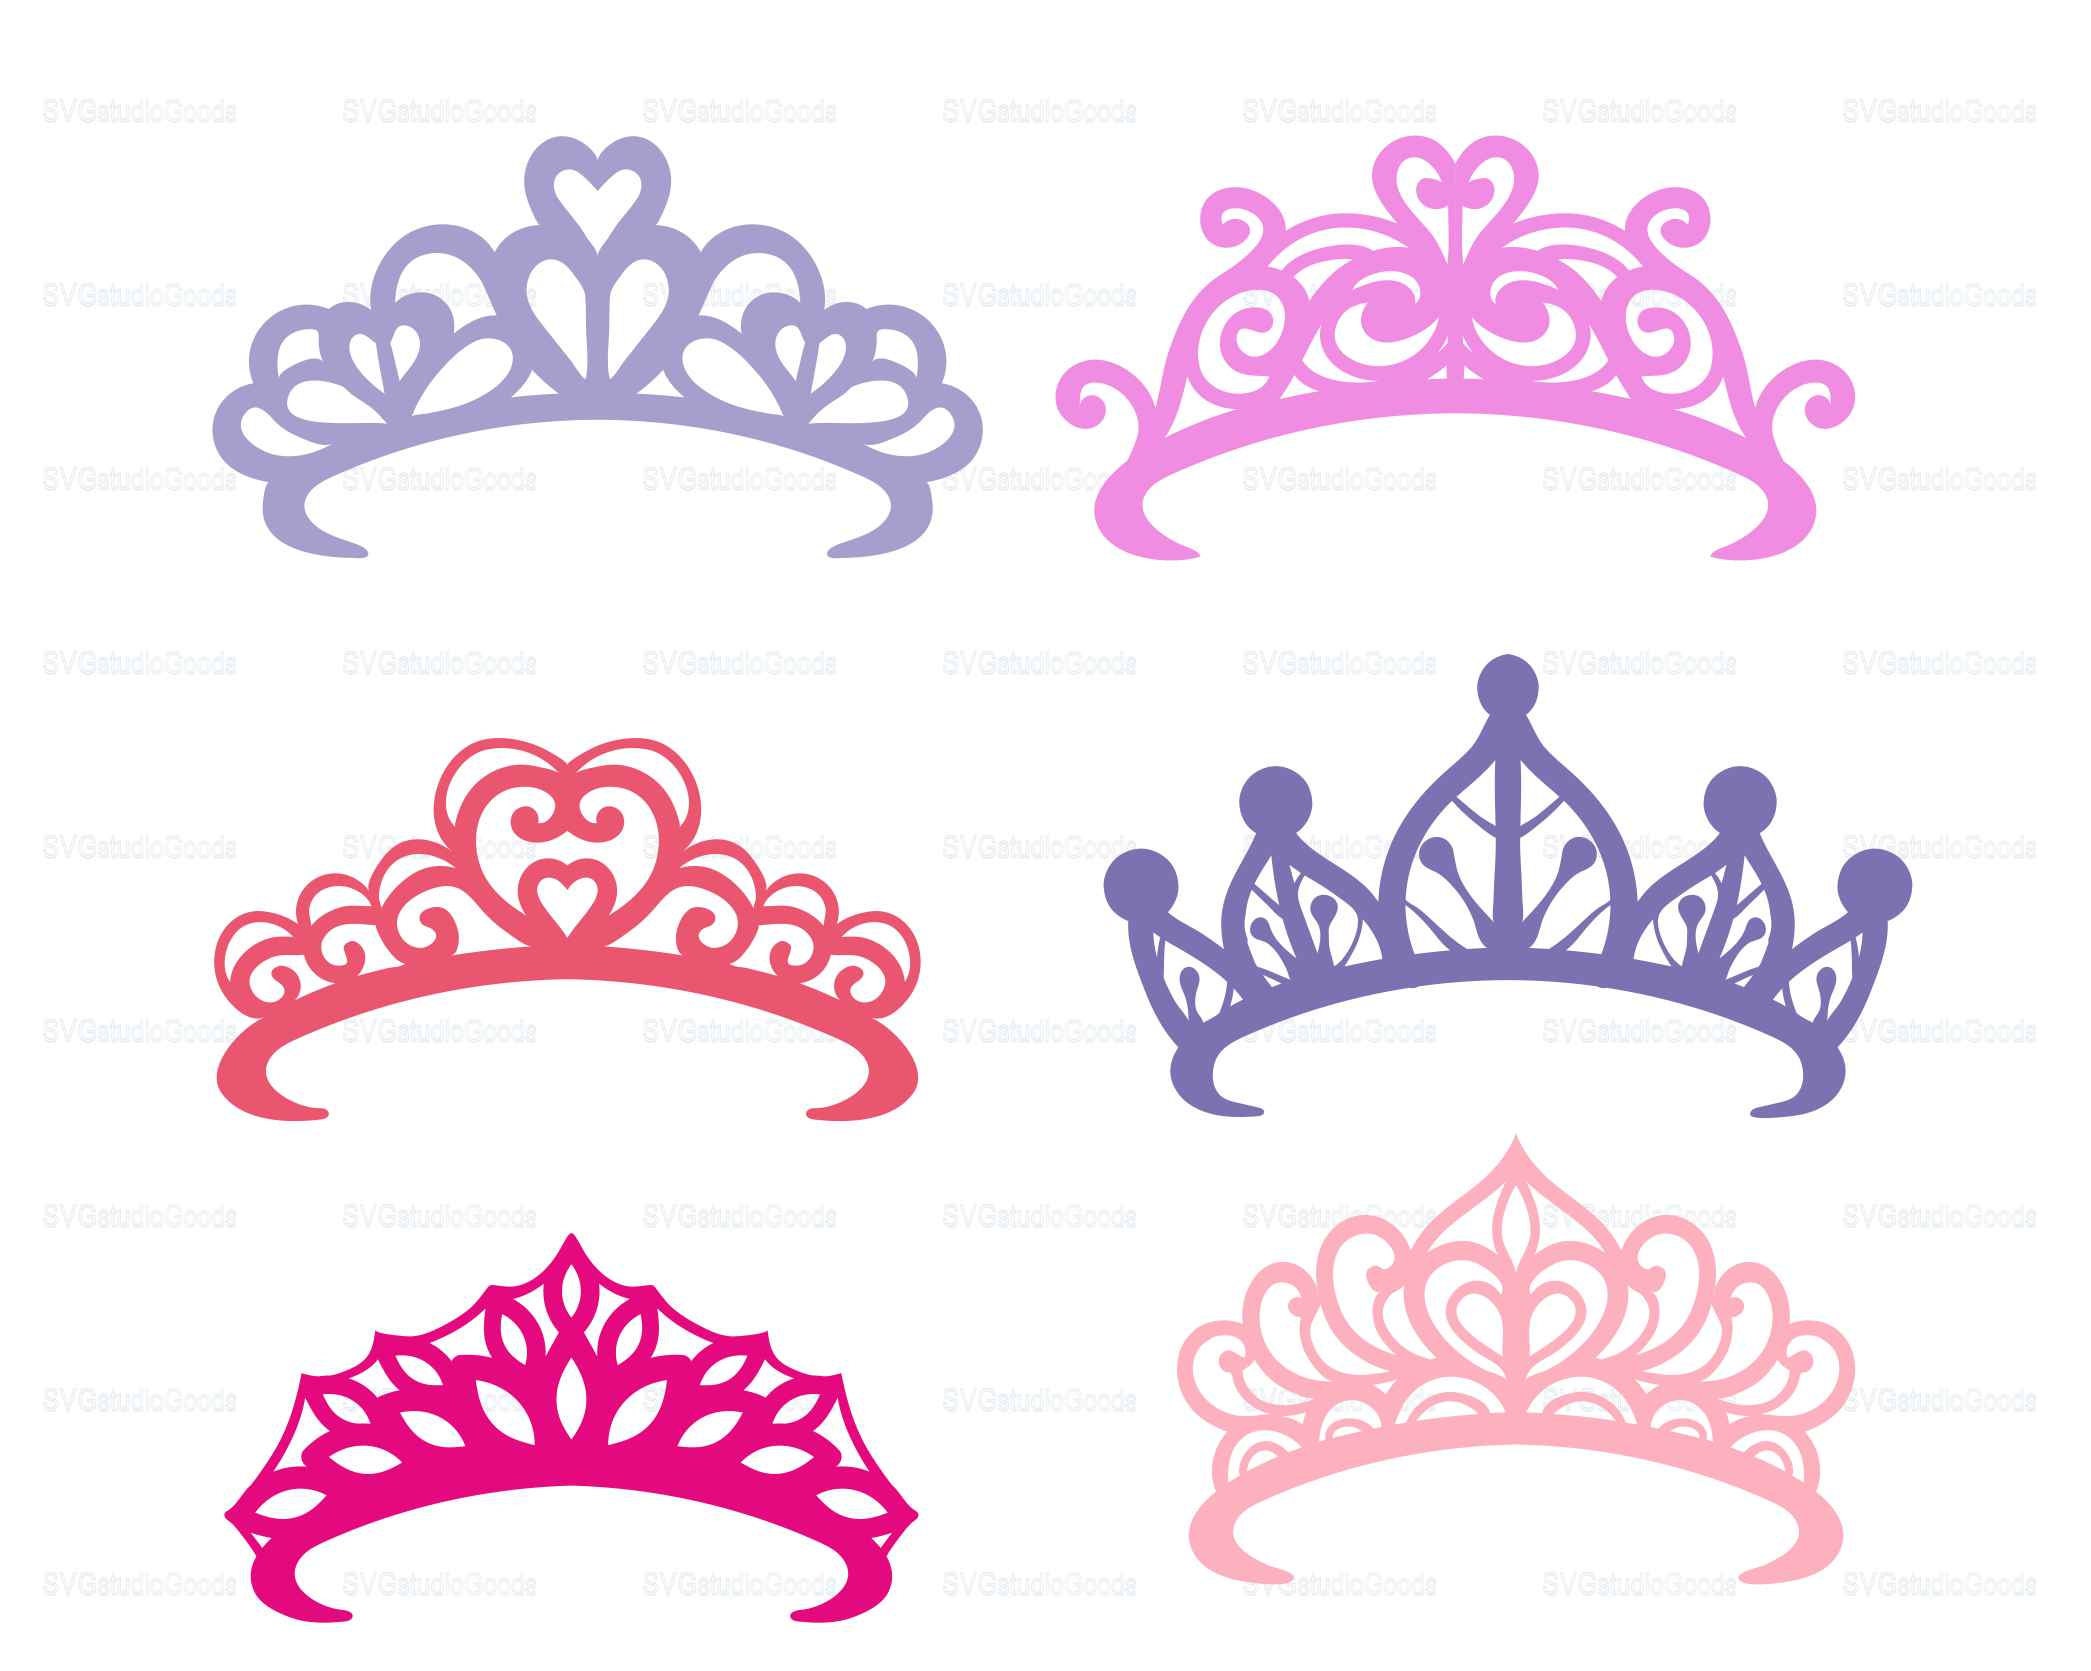 Download Crowns Svg Princess Crown Svg Crown clipart Eps Dxf